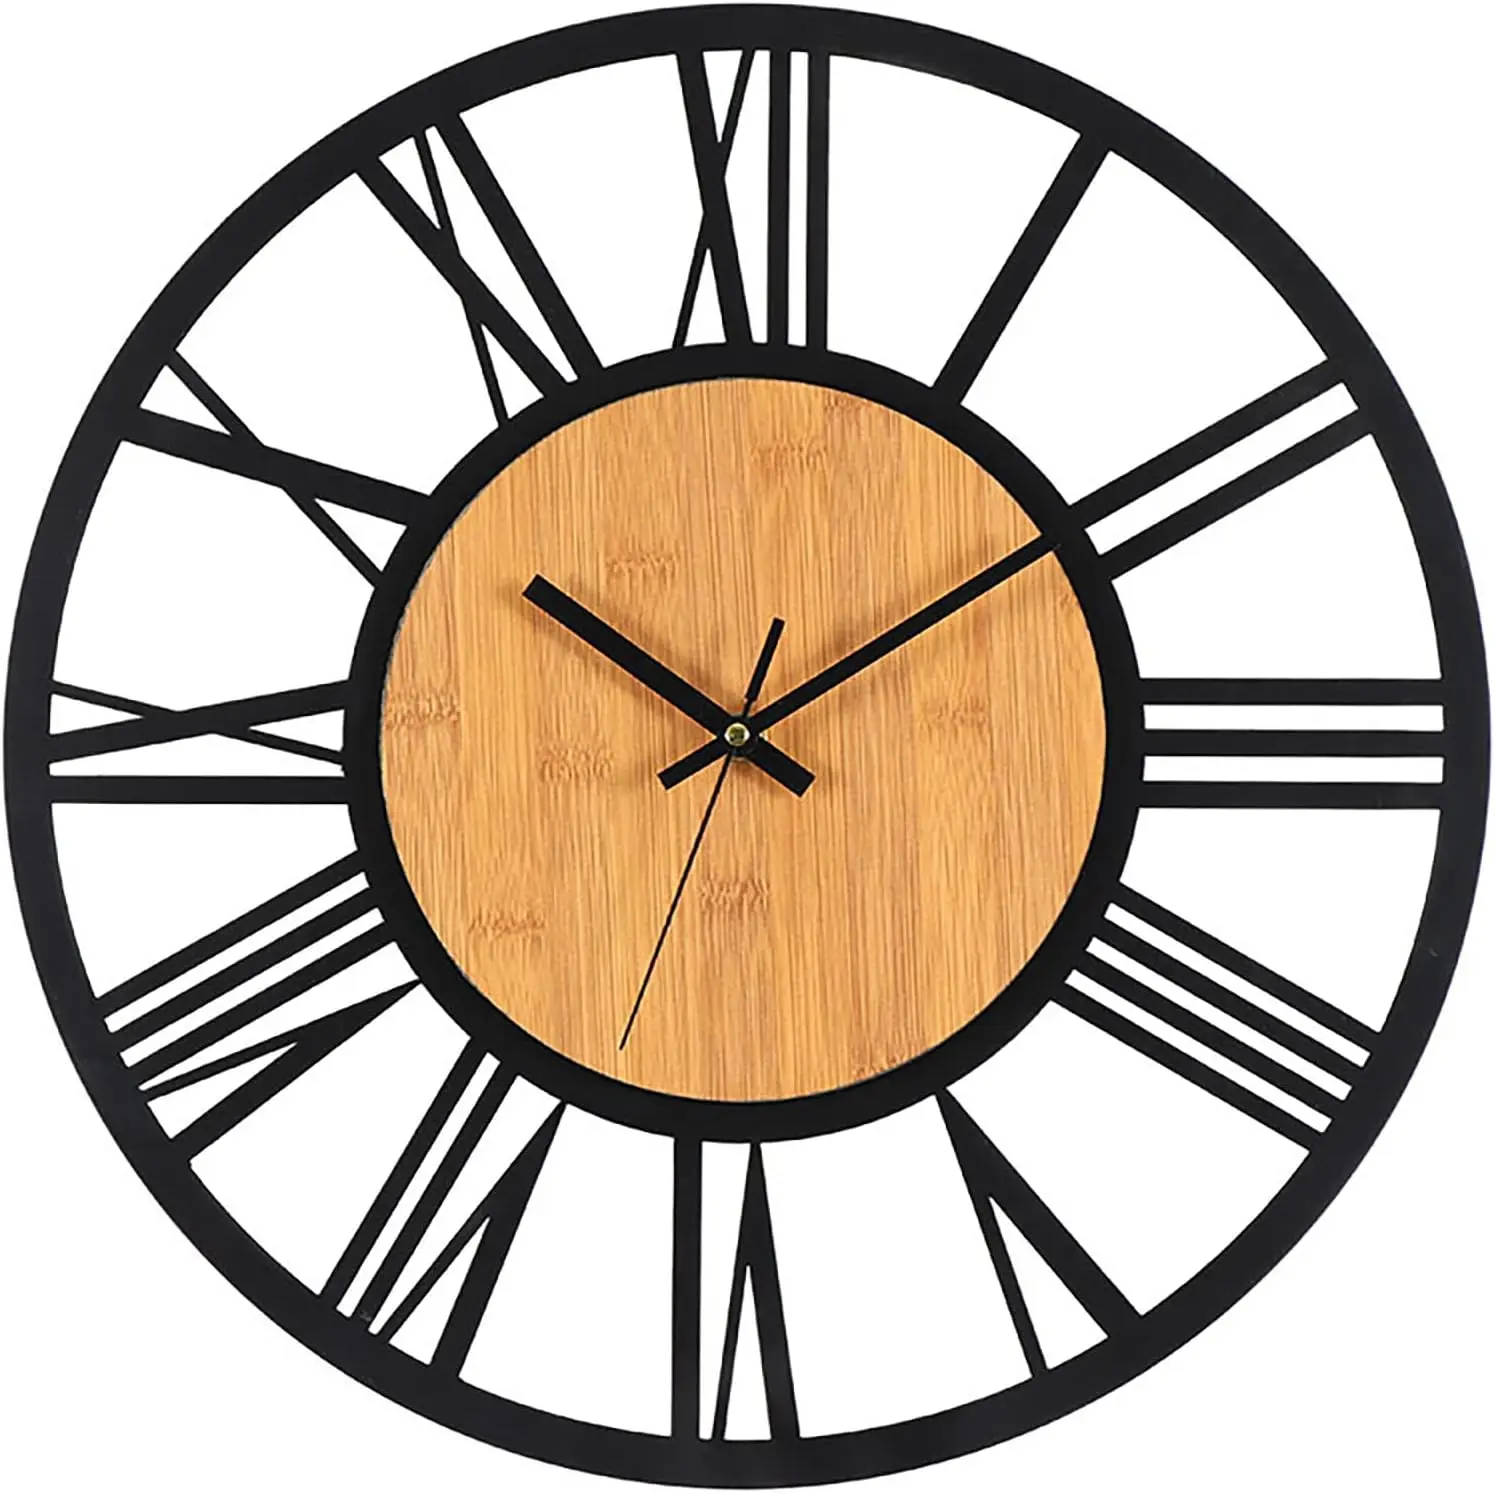 

Reloj de Pared Metal Madera 40cm Reloj de Pared Silencioso Sin Ruido Tictac Decoración Salón Dormitorio Cocina Oficina Hogar R